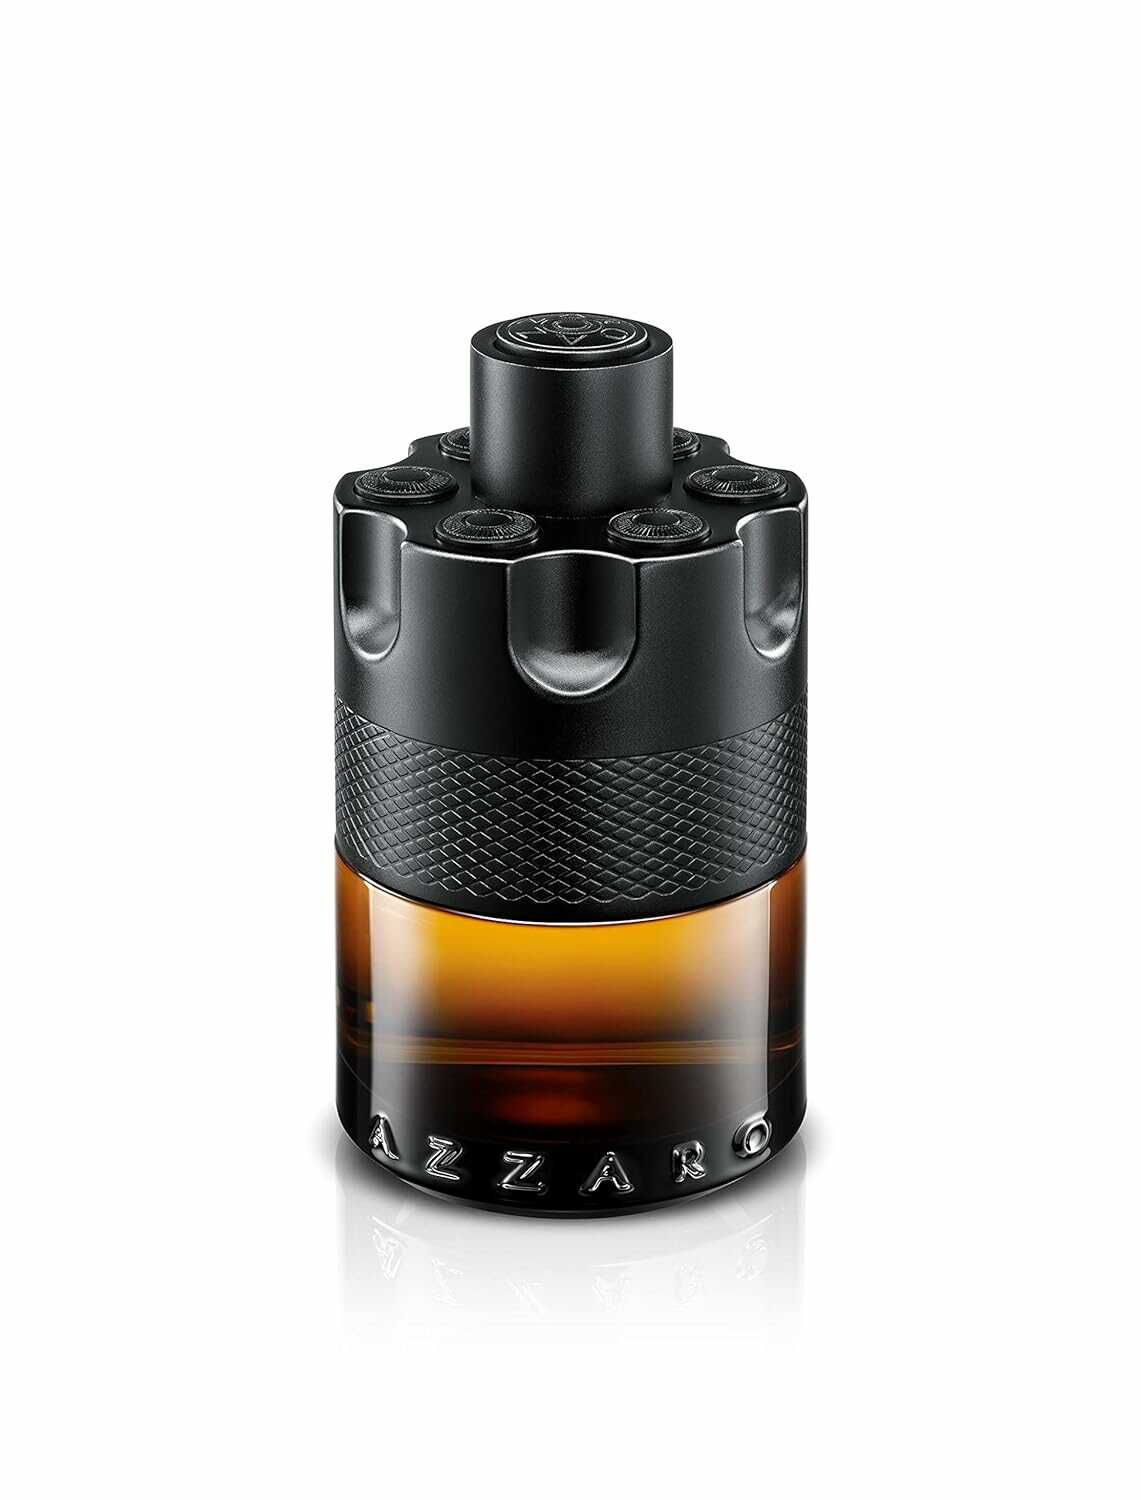 Azzaro The Most Wanted Le Parfum 50ml für 39,75€ statt 50,96€